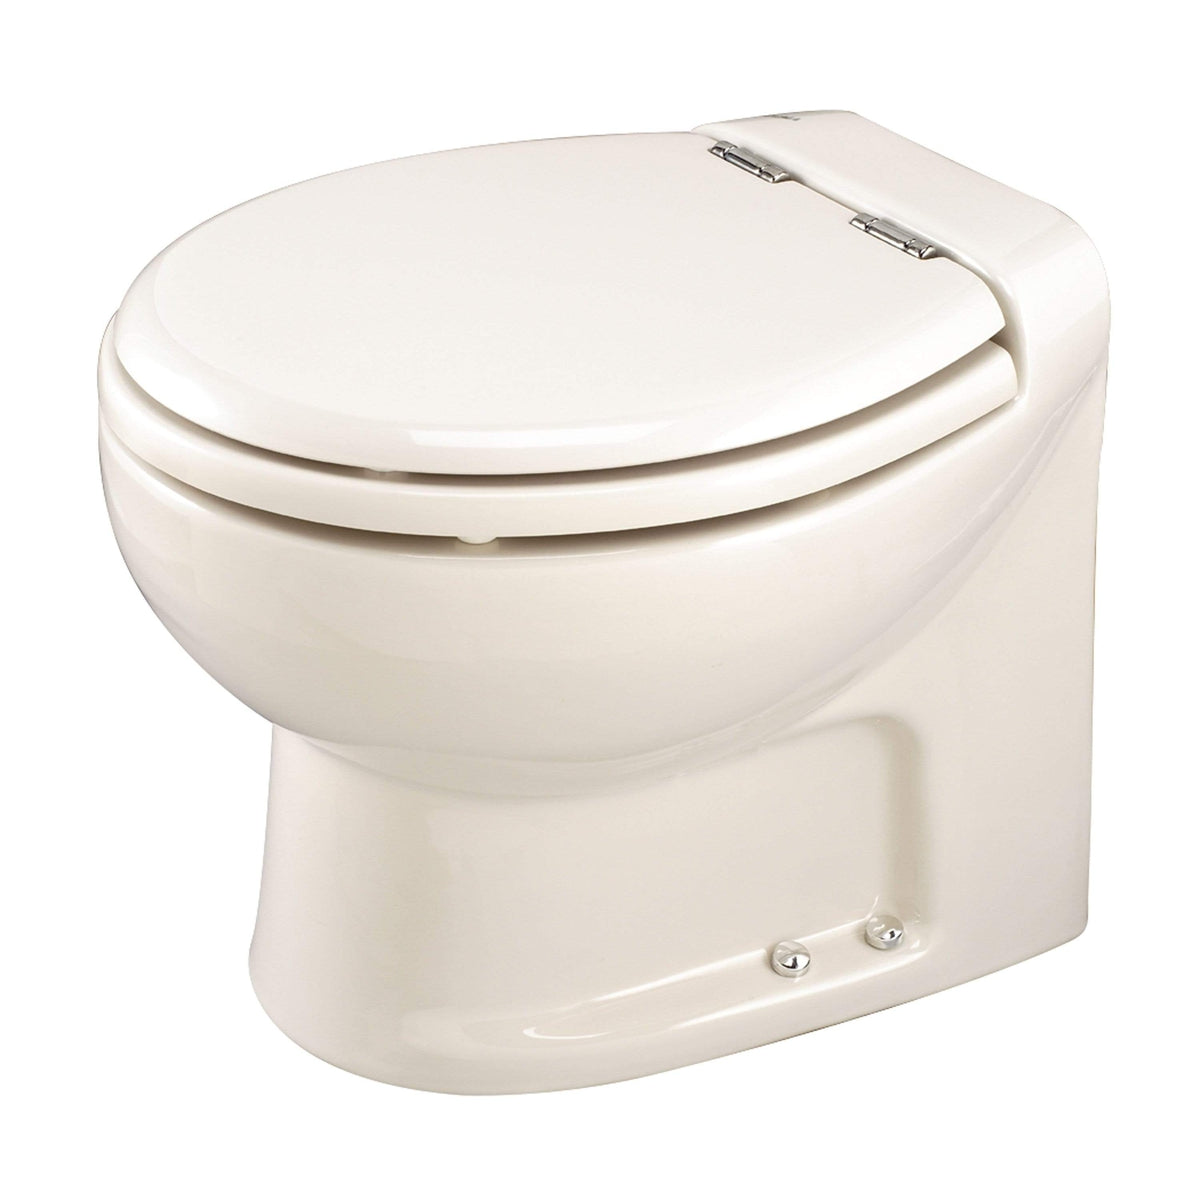 Thetford Not Qualified for Free Shipping Thetford Tecma Silence Plus 2 Mode 24v RV Toilet Bone #38360